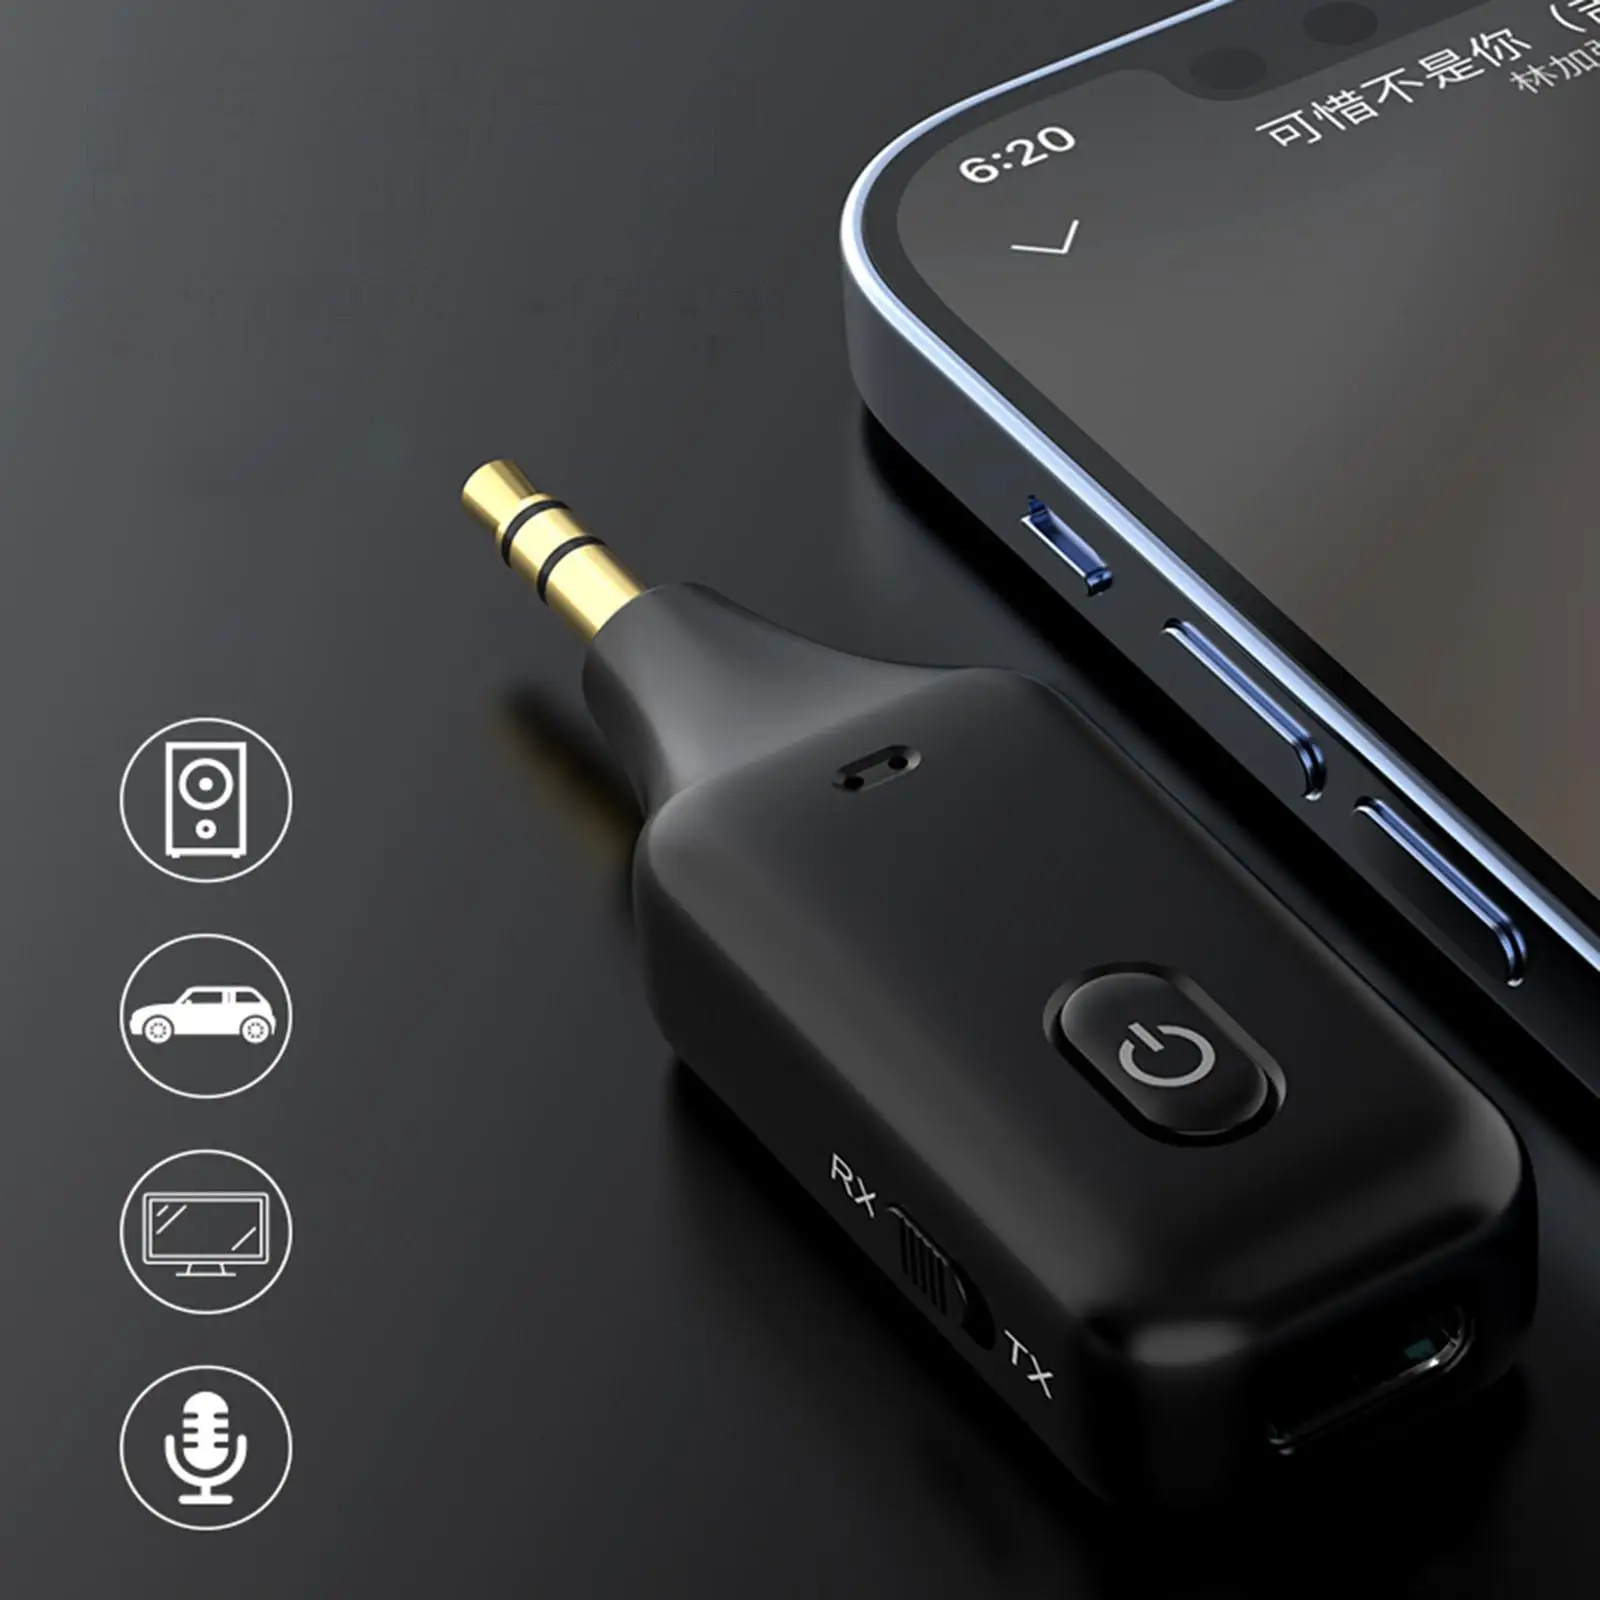 .1 Audio Receiver Adapter for Headphone Home Speaker